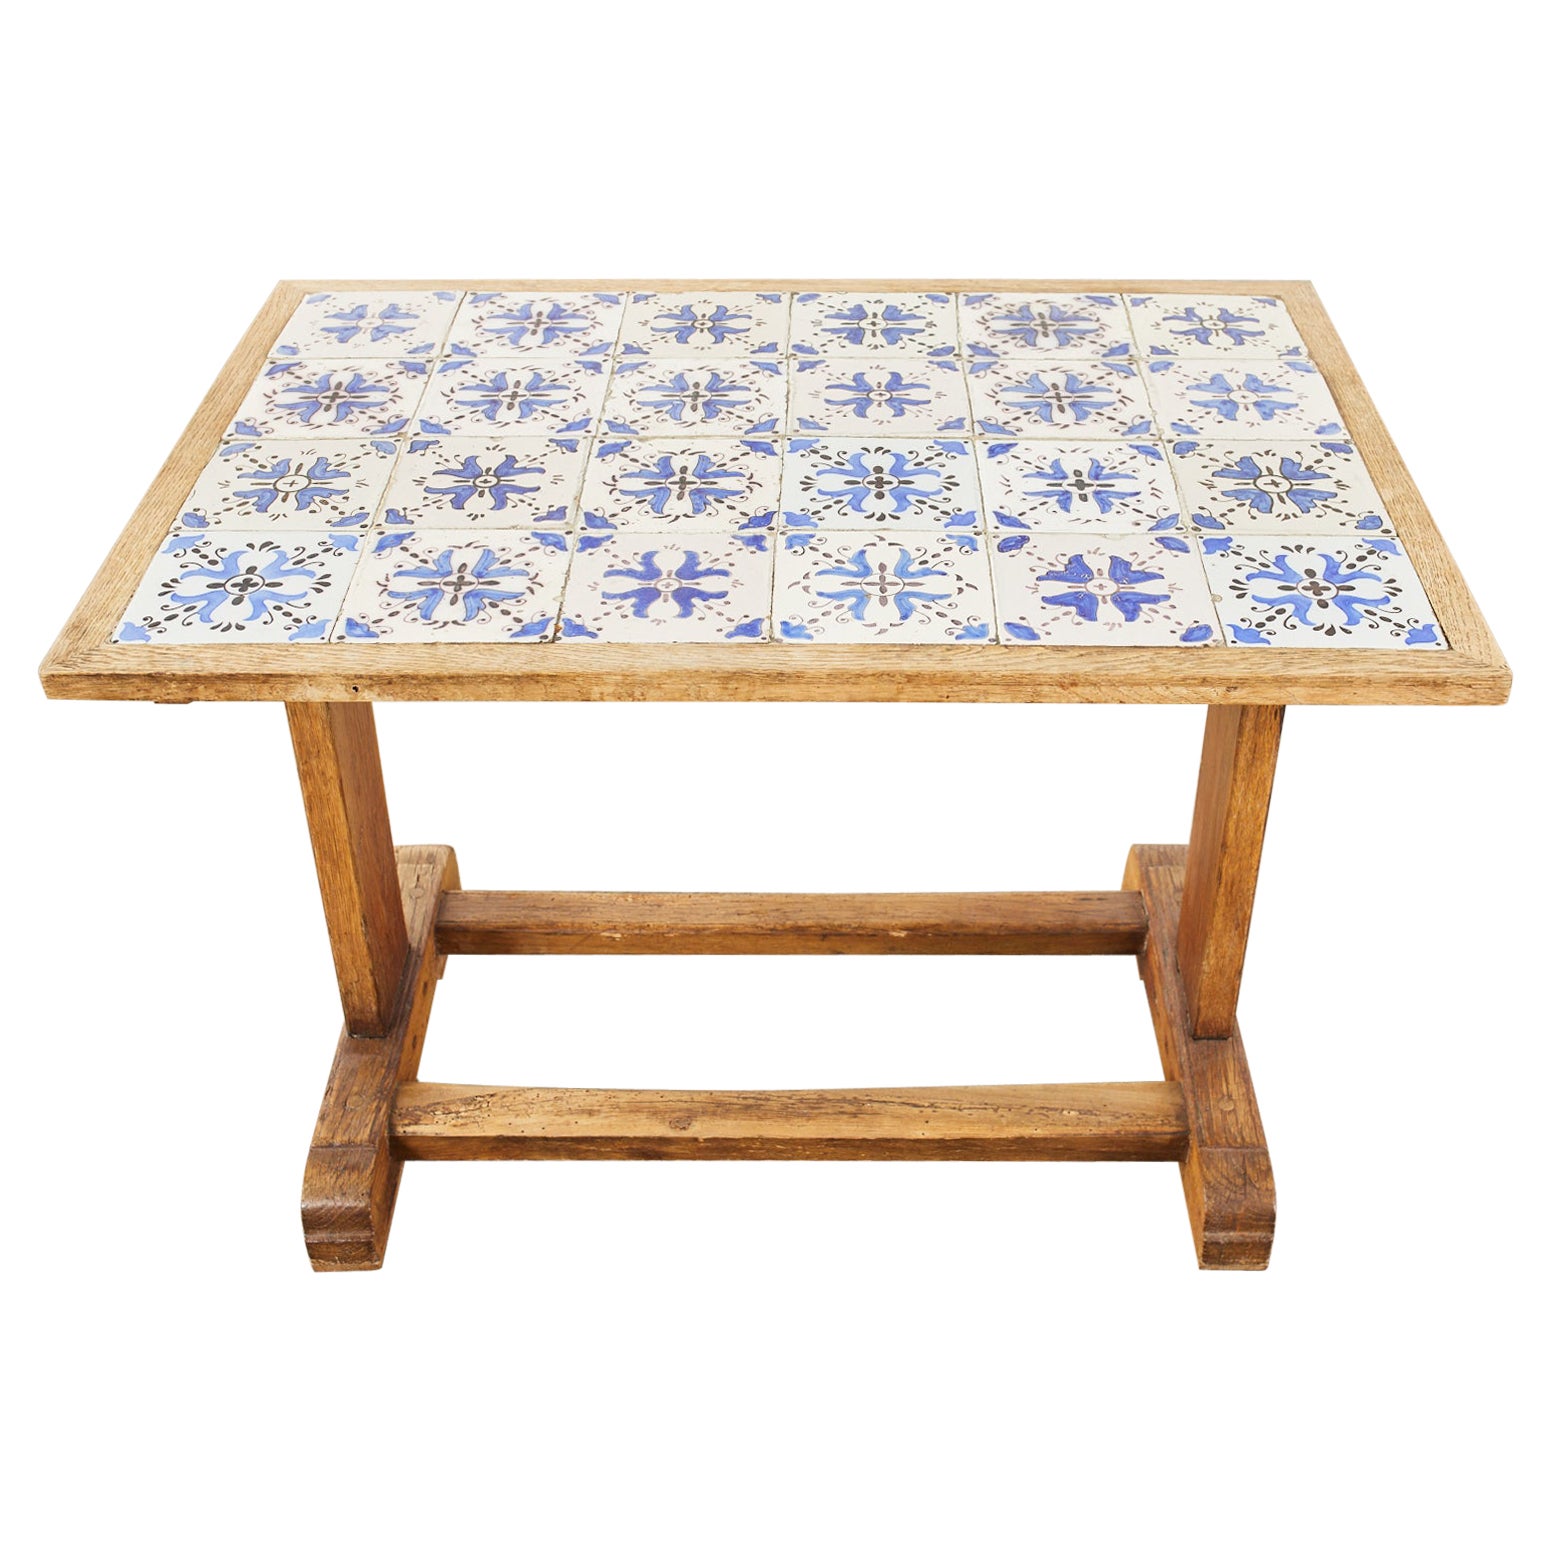 Midcentury Danish Oak Porcelain Tile Top Coffee Table